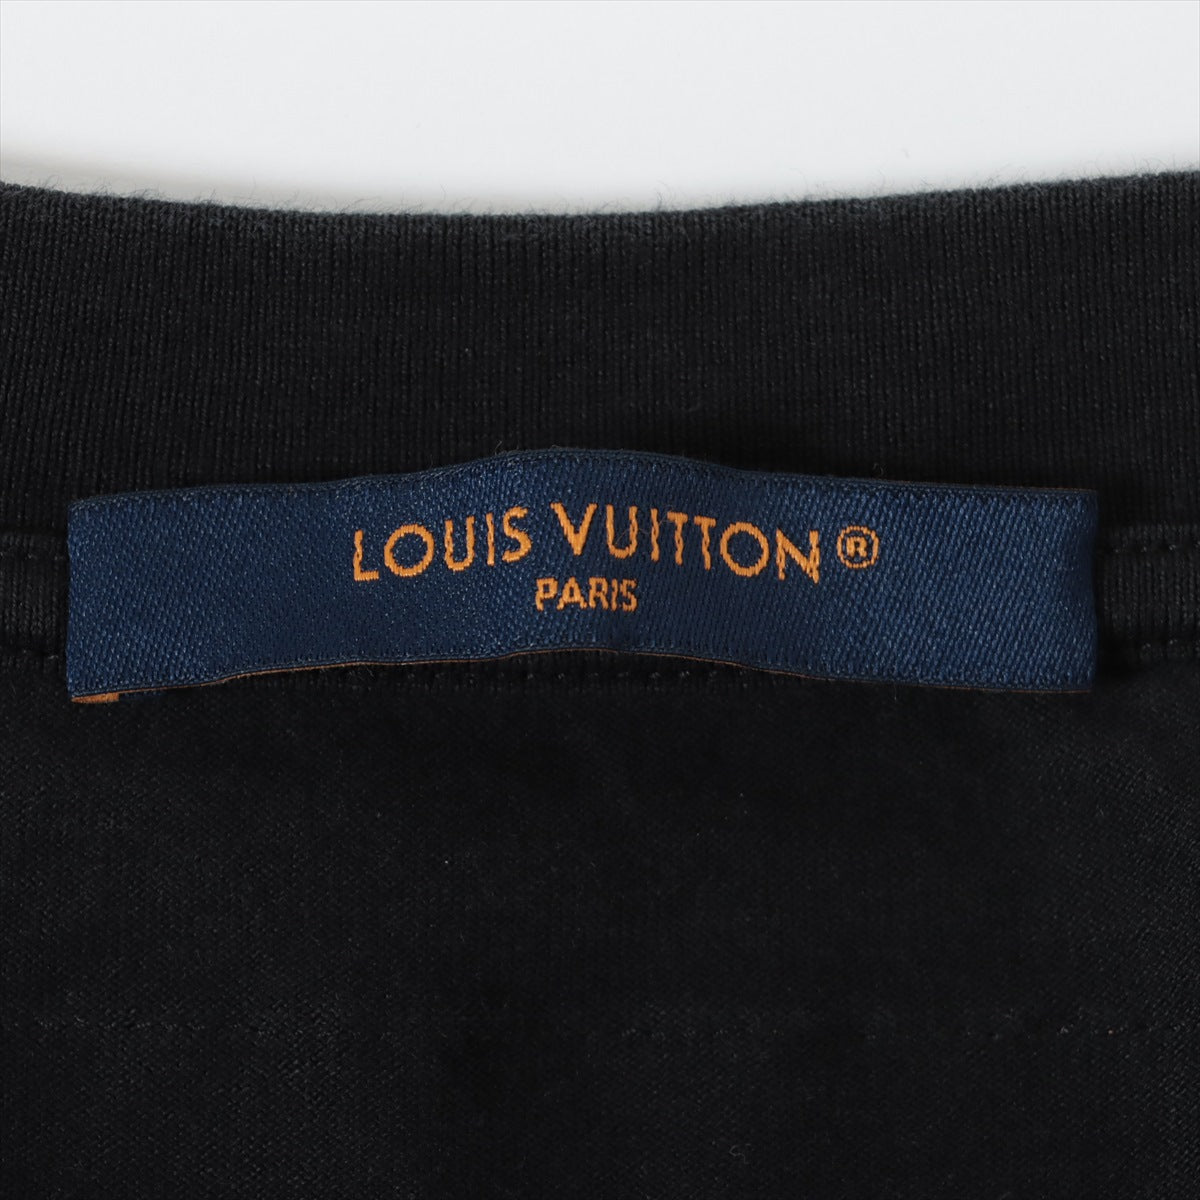 Louis Vuitton 希少マルチカラープリンテッドTシャツ